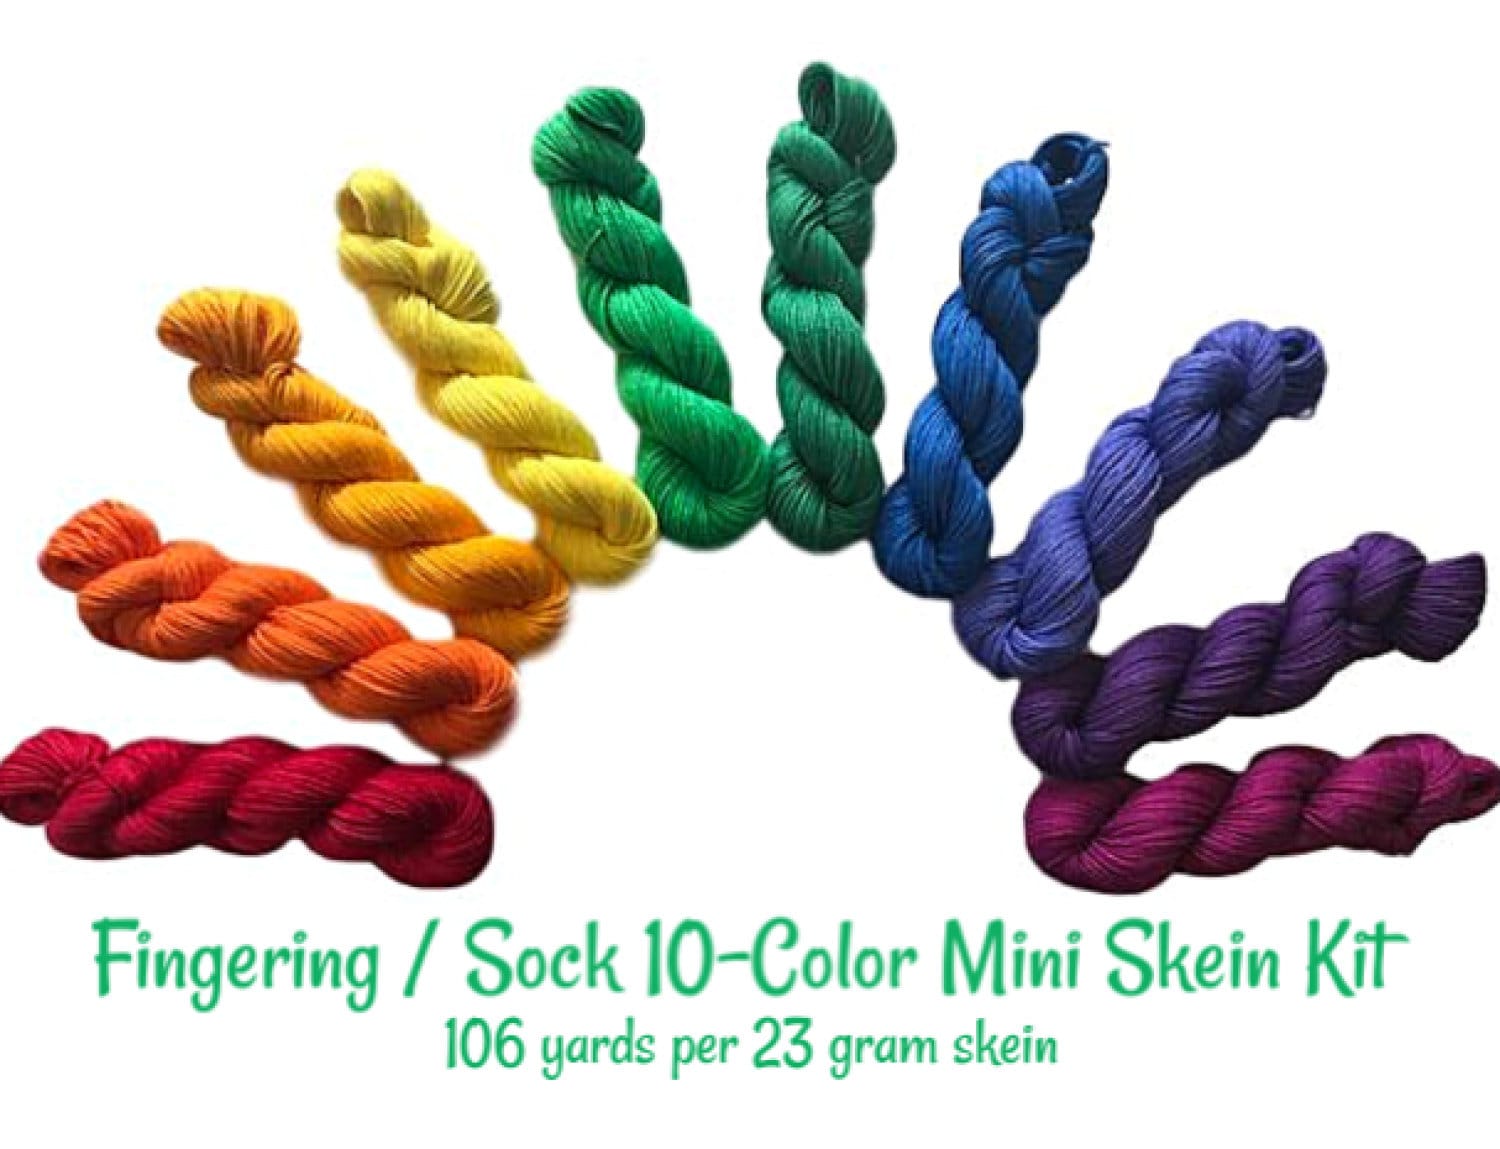 Rainbow Hand Dyed Yarn Kit - Vegan Fiber (Bamboo Cotton) - Fingering Wt Mini Skeins - Indie Dyed Artisan 3 Ply Fiber - Semi Solids & Tonals